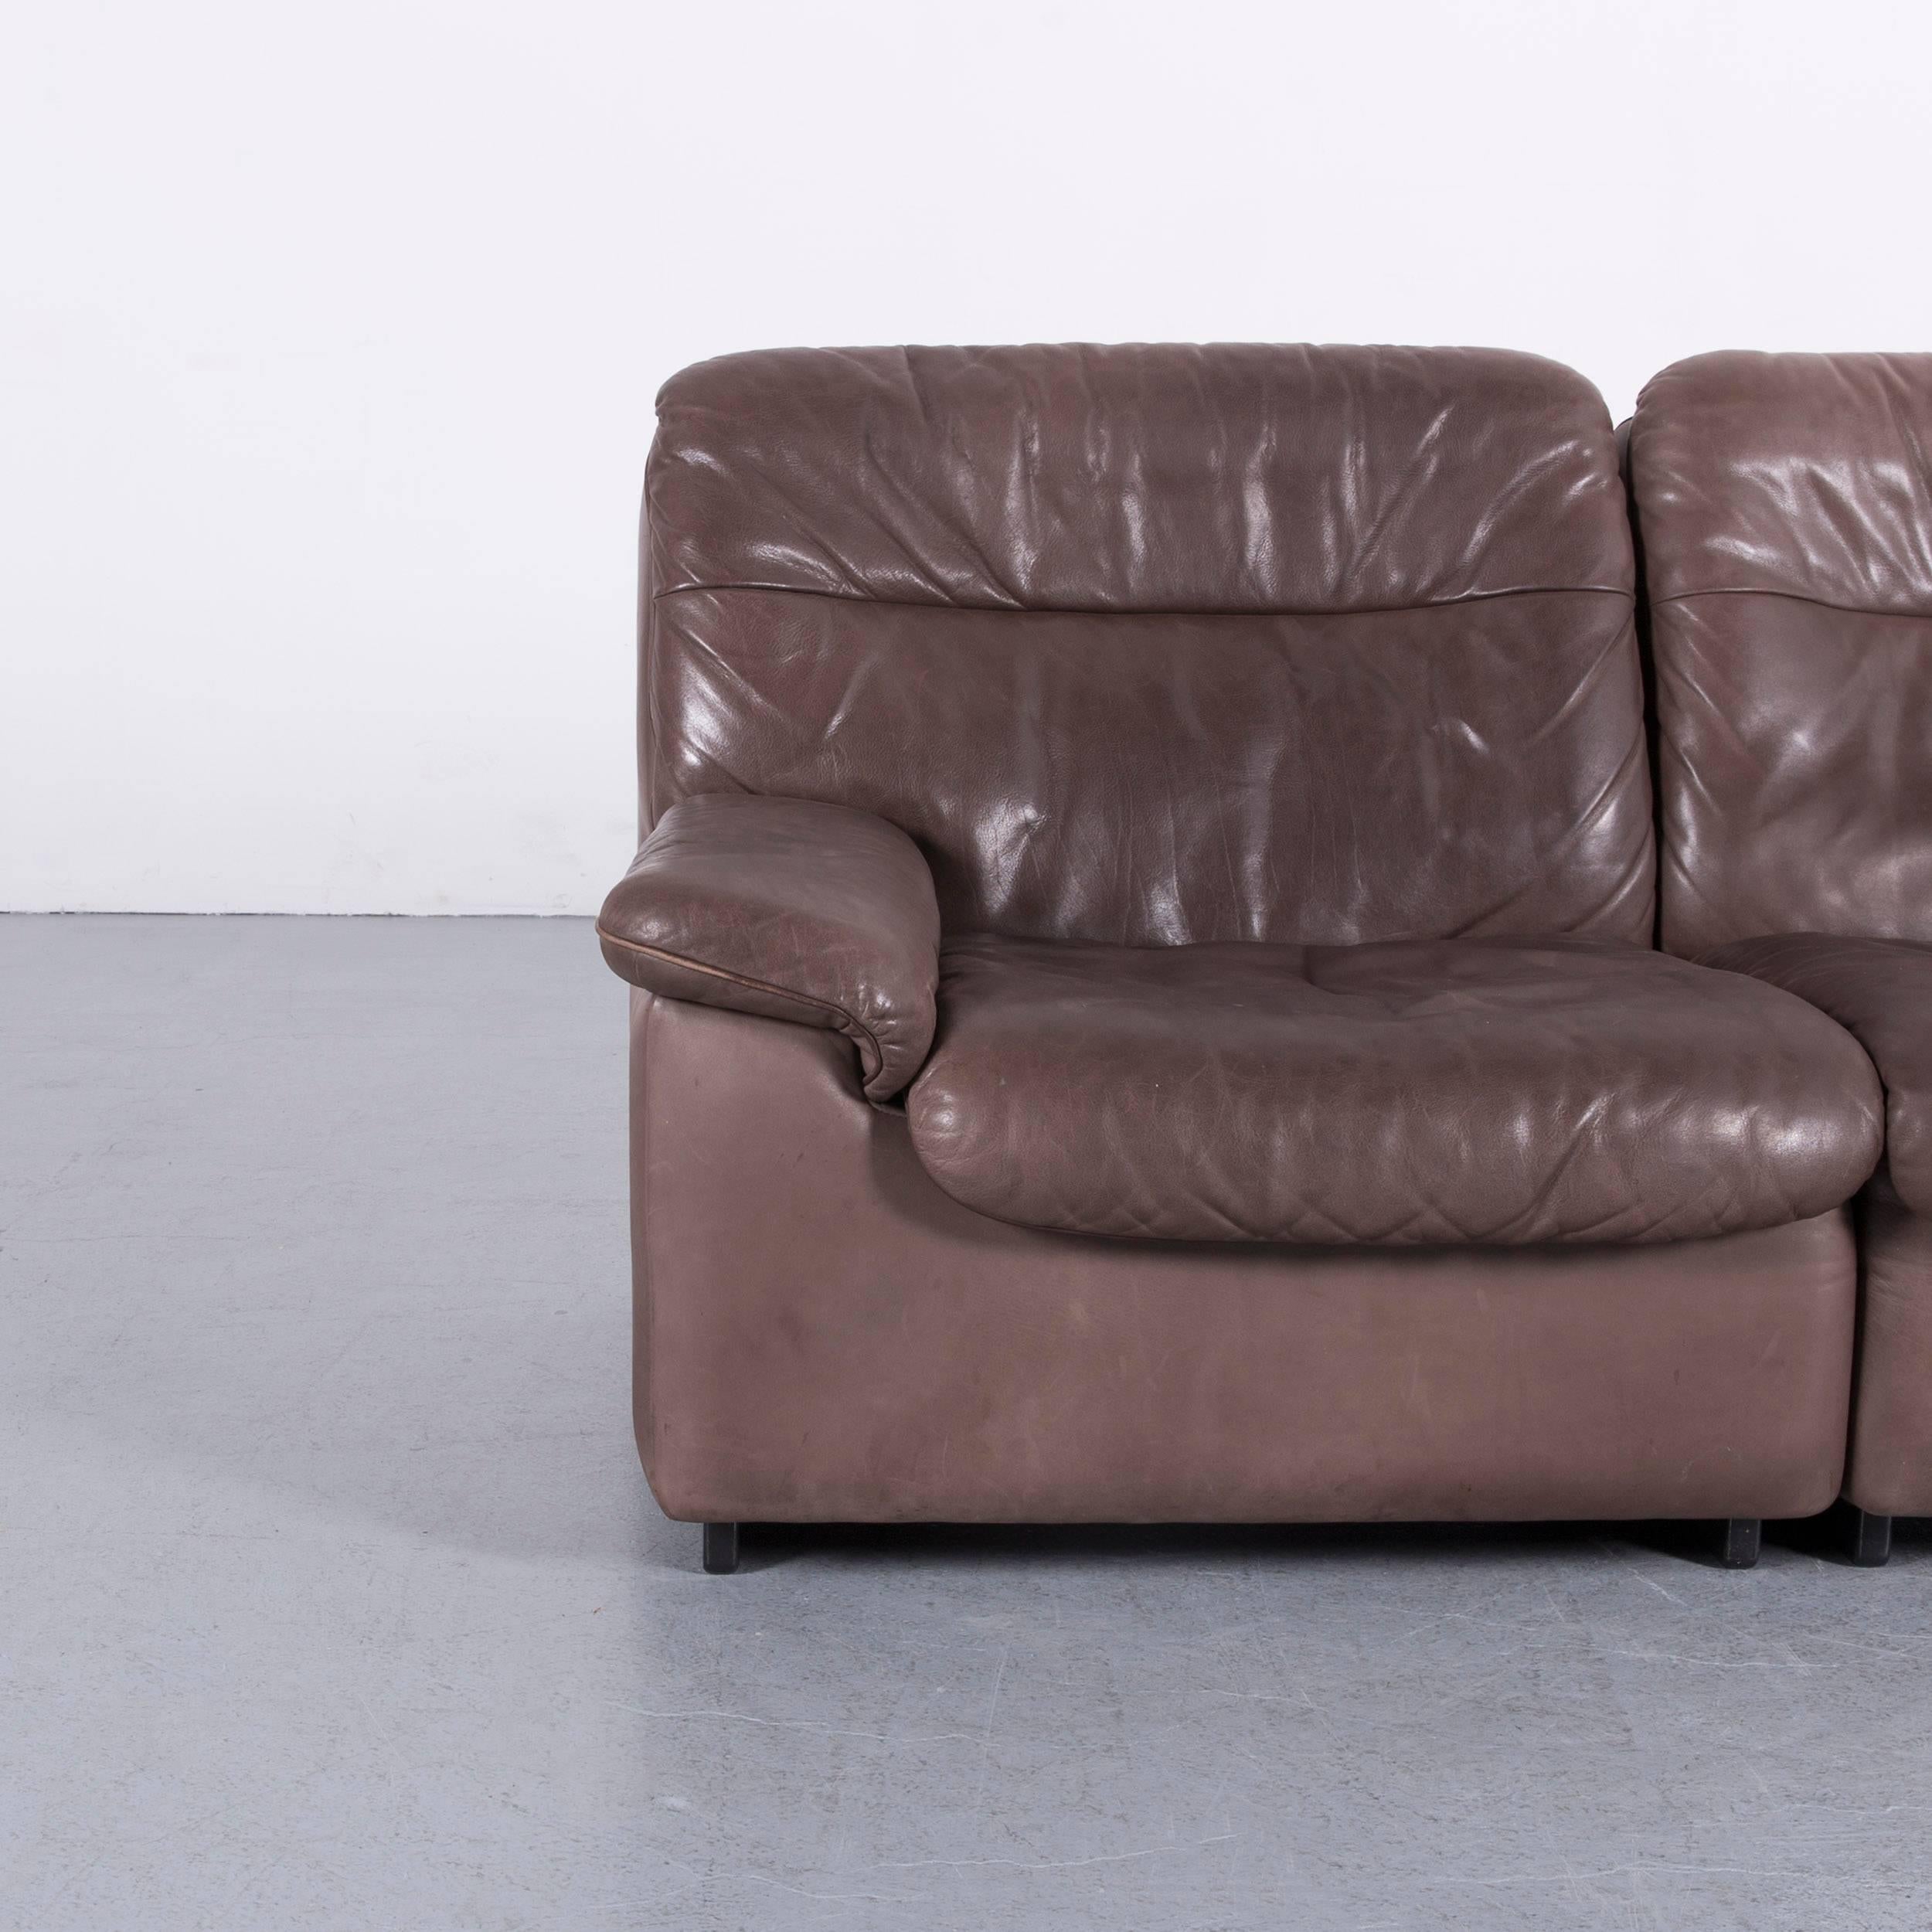 Swiss De Sede DS 66 Designer Leather Sofa Set Brown Two-Seat